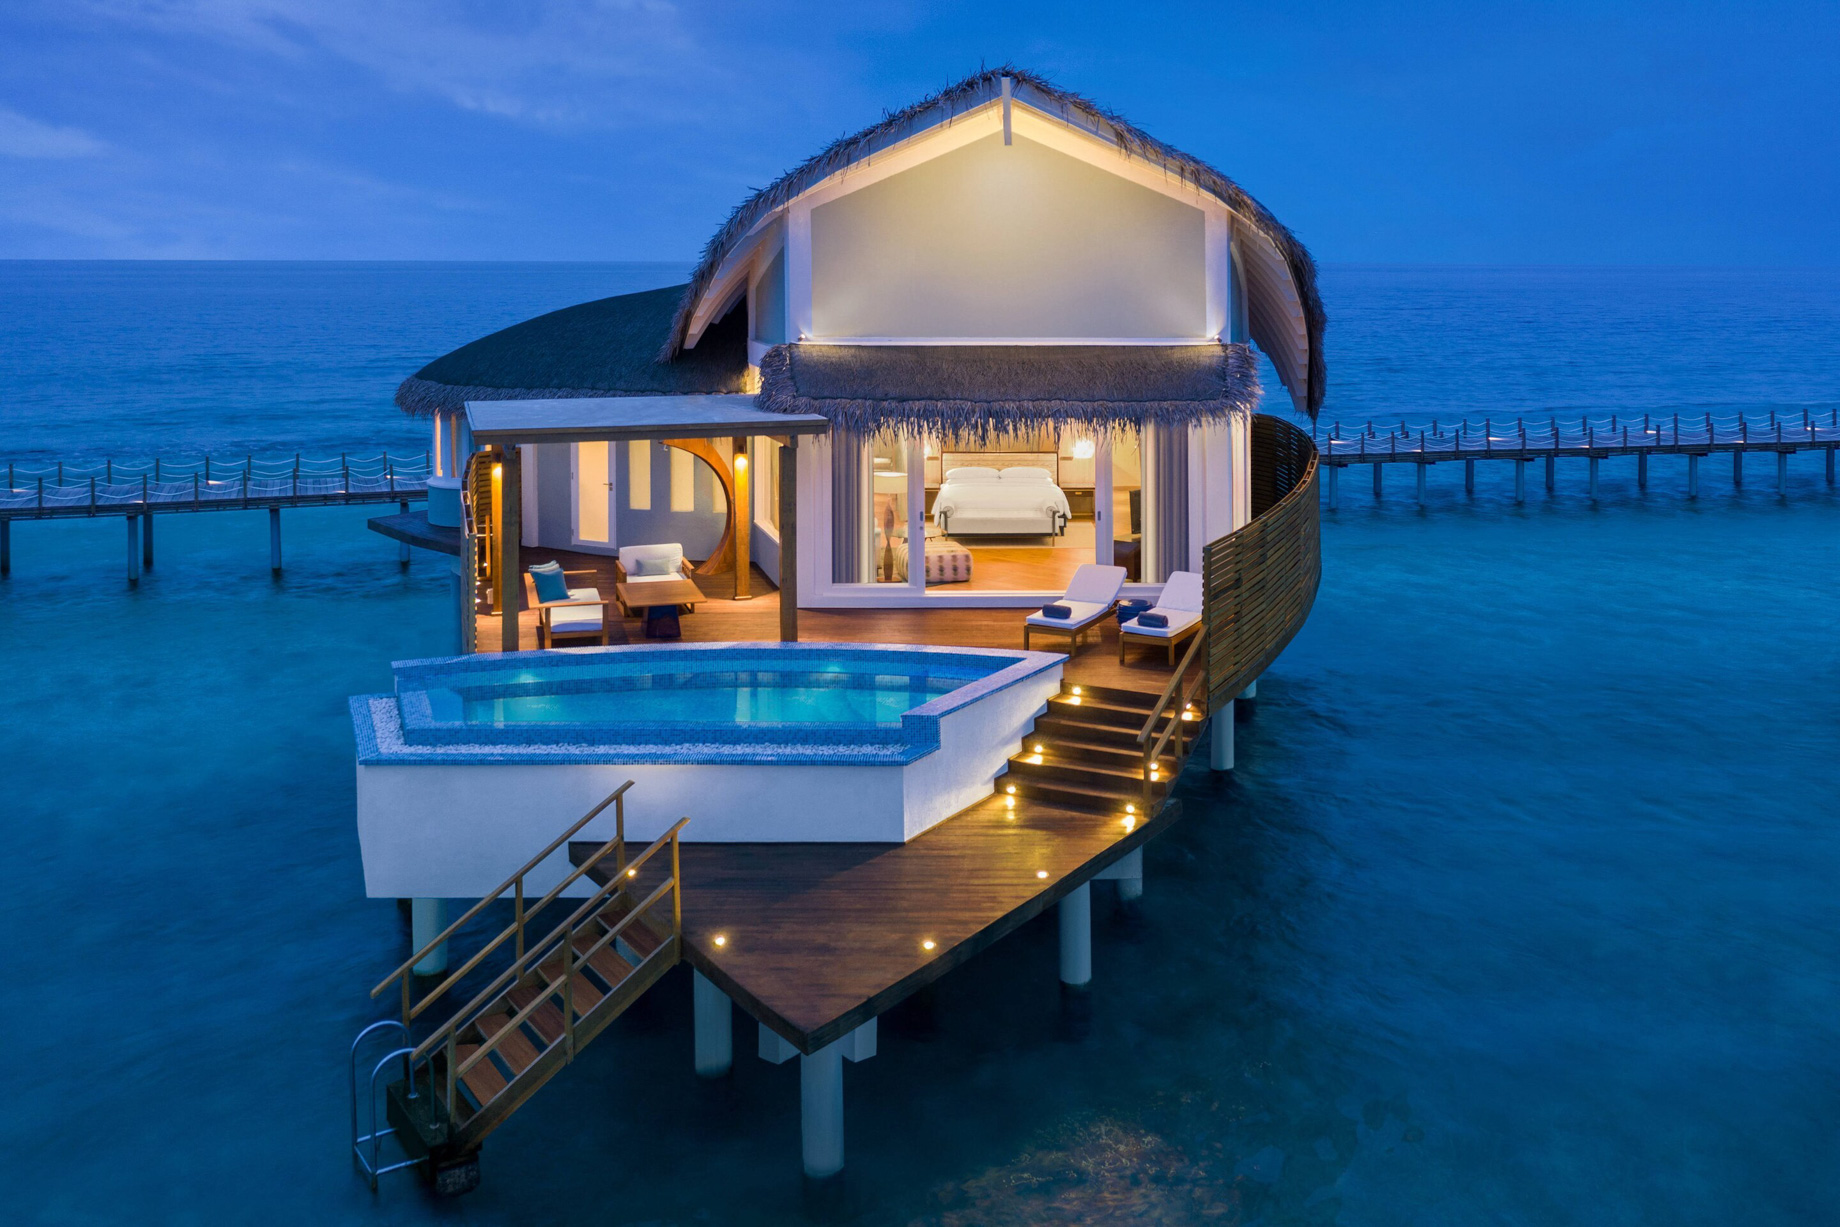 JW Marriott Maldives Resort & Spa – Shaviyani Atoll, Maldives – Overwater Pool Villa Exterior Twilight